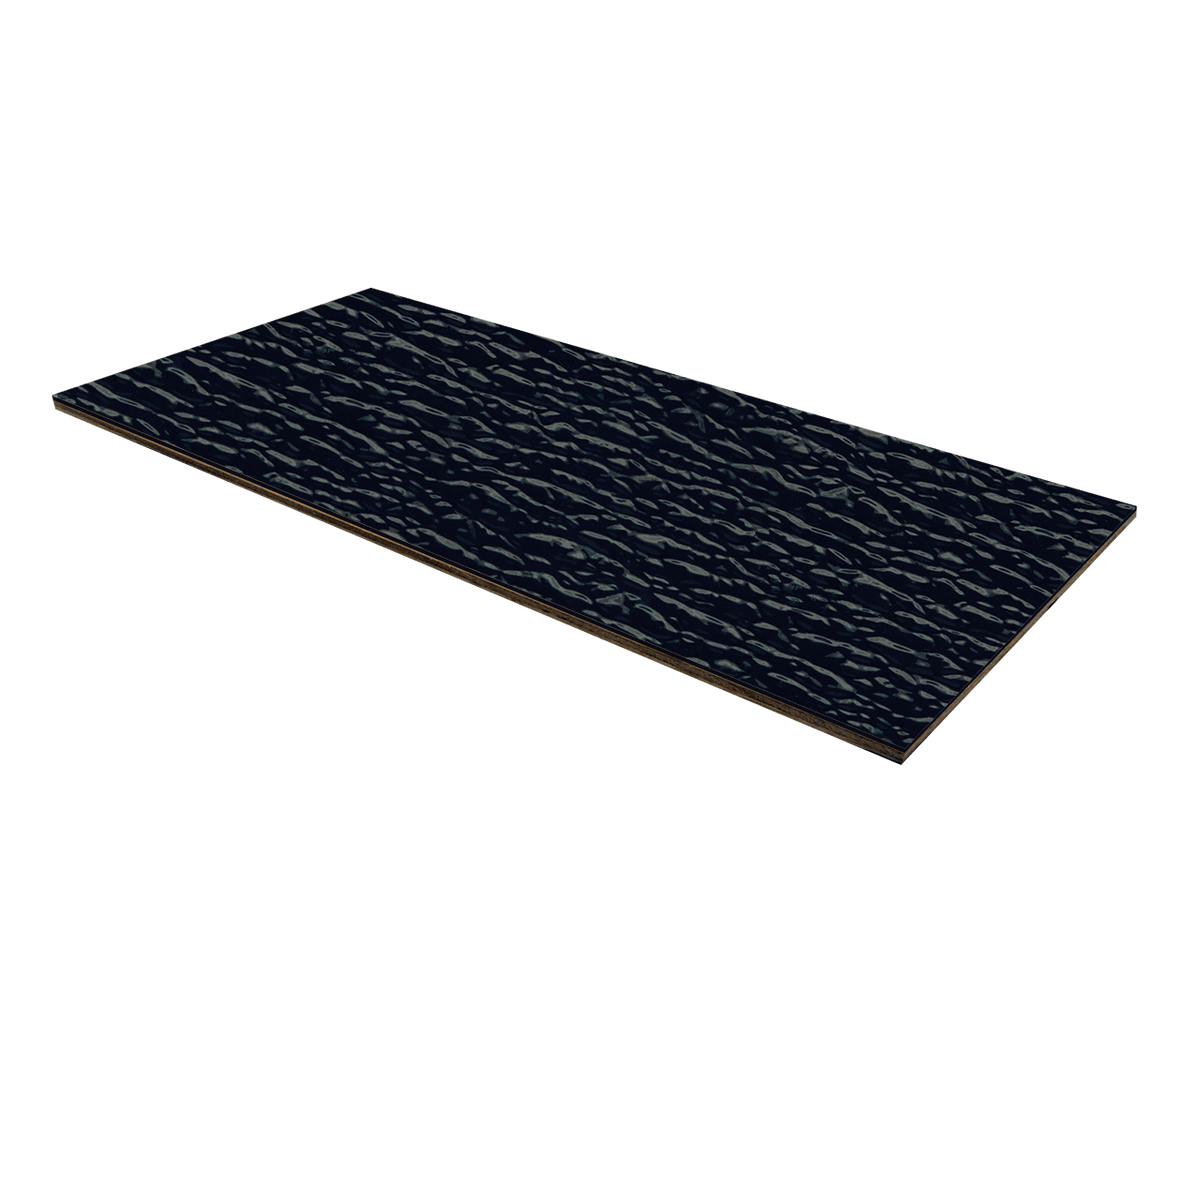 1/8" Textured Fiberglass Laminate - Black